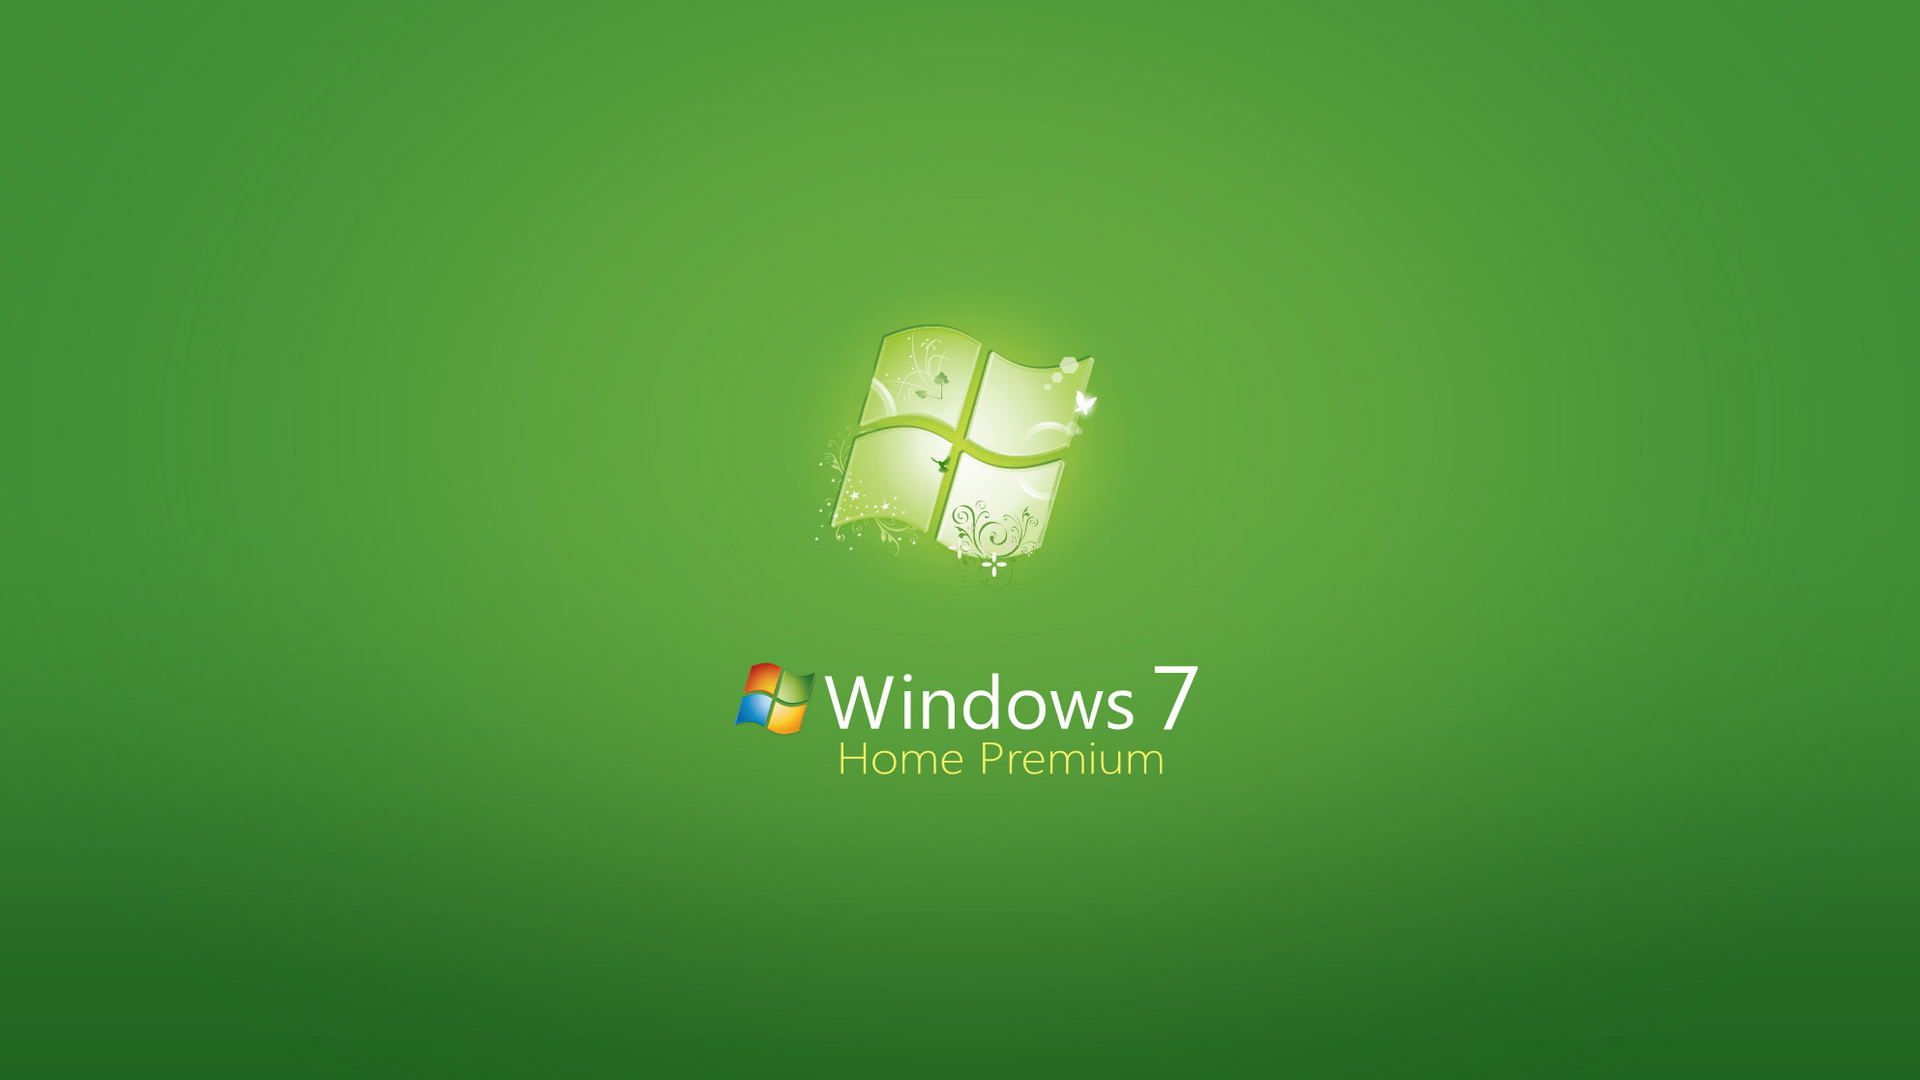 windows, logos, brands, background, green